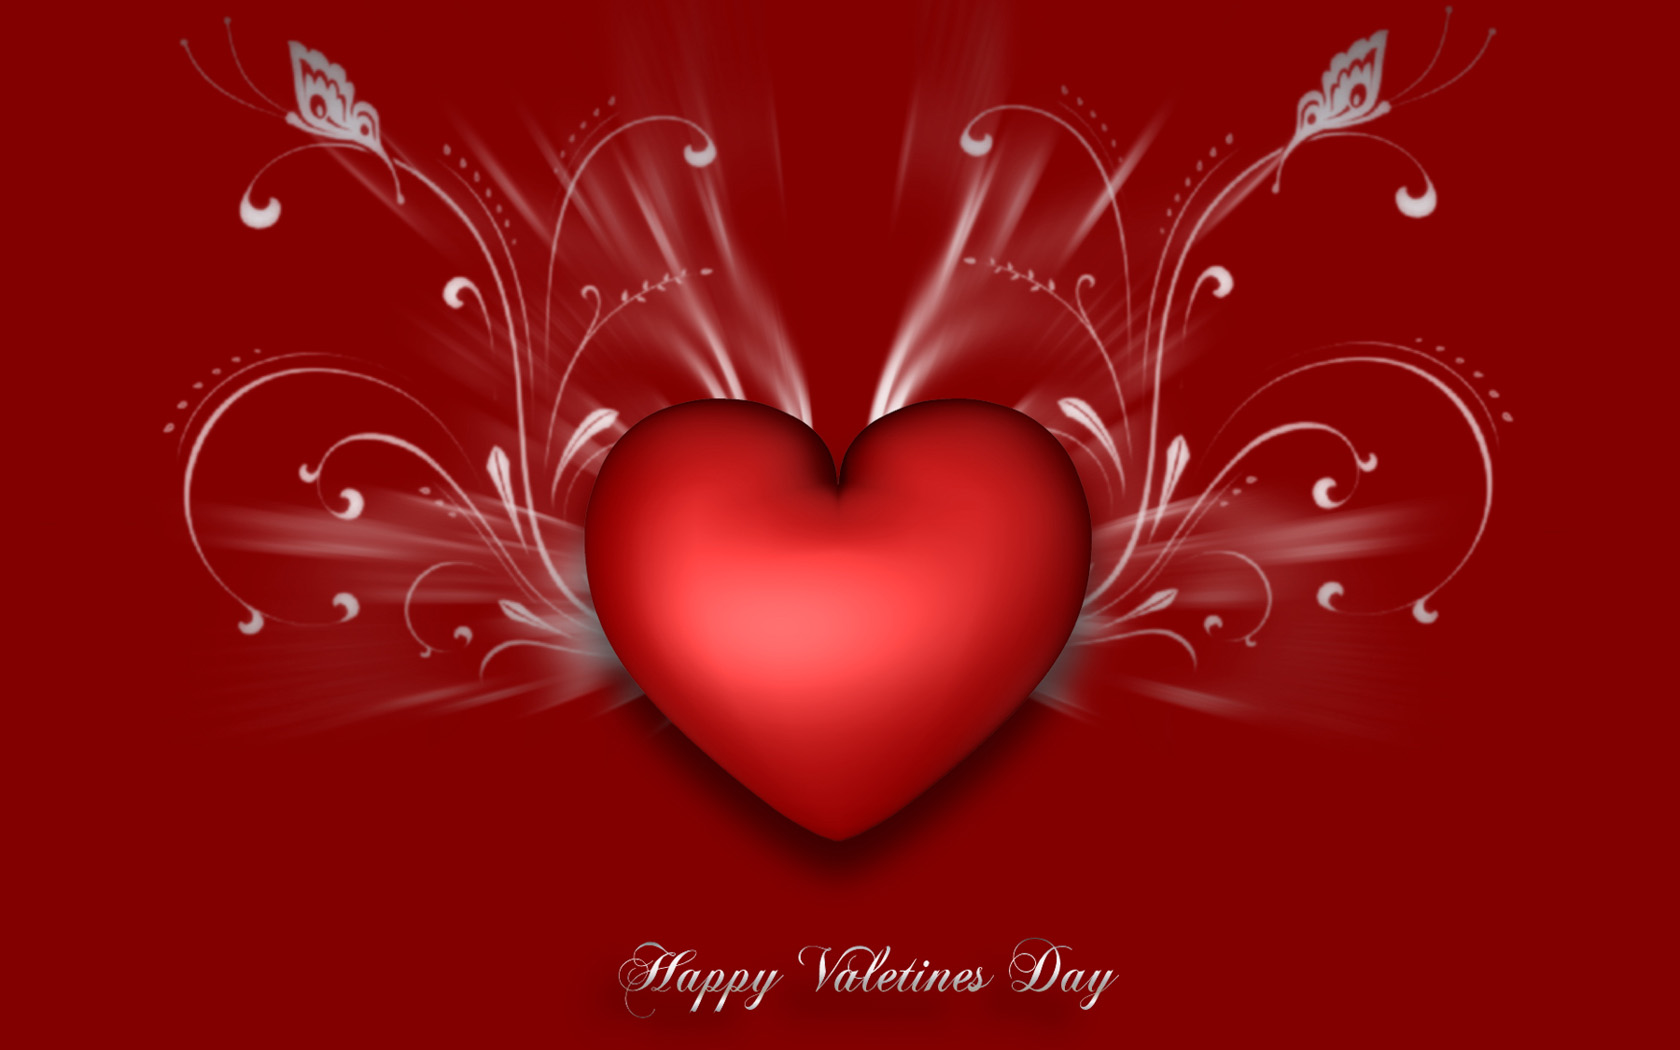 Google Image Valentine Wallpaper 9q9h988 Picserio